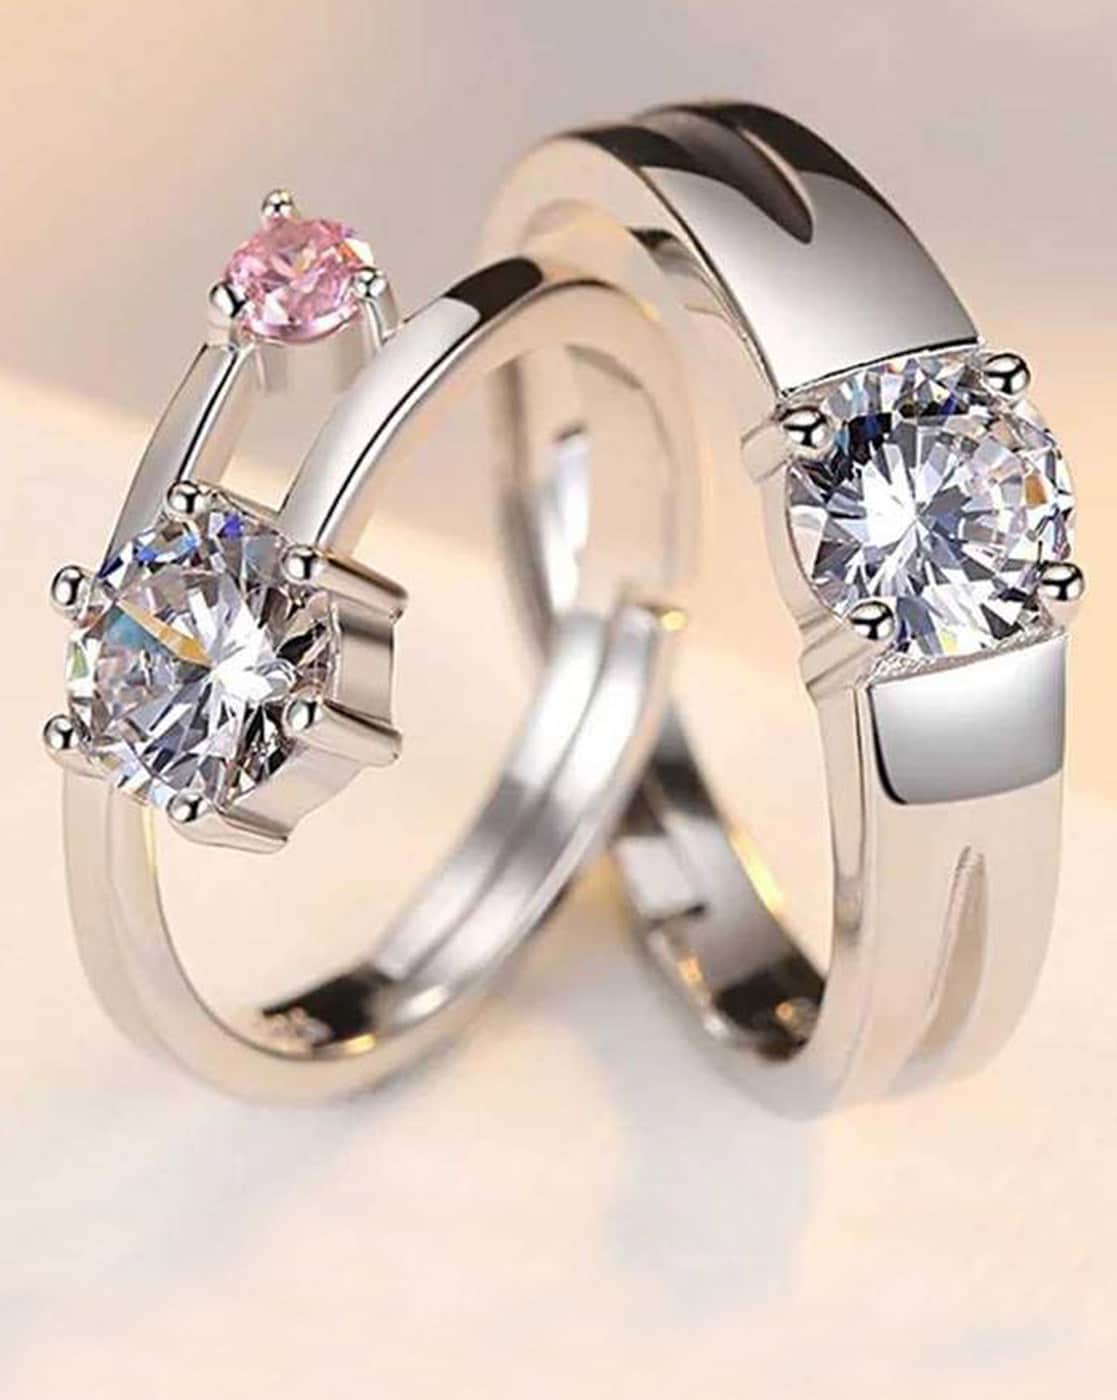 Malabar Gold and Diamonds 950 Platinum Ring for Women : Amazon.in: Fashion